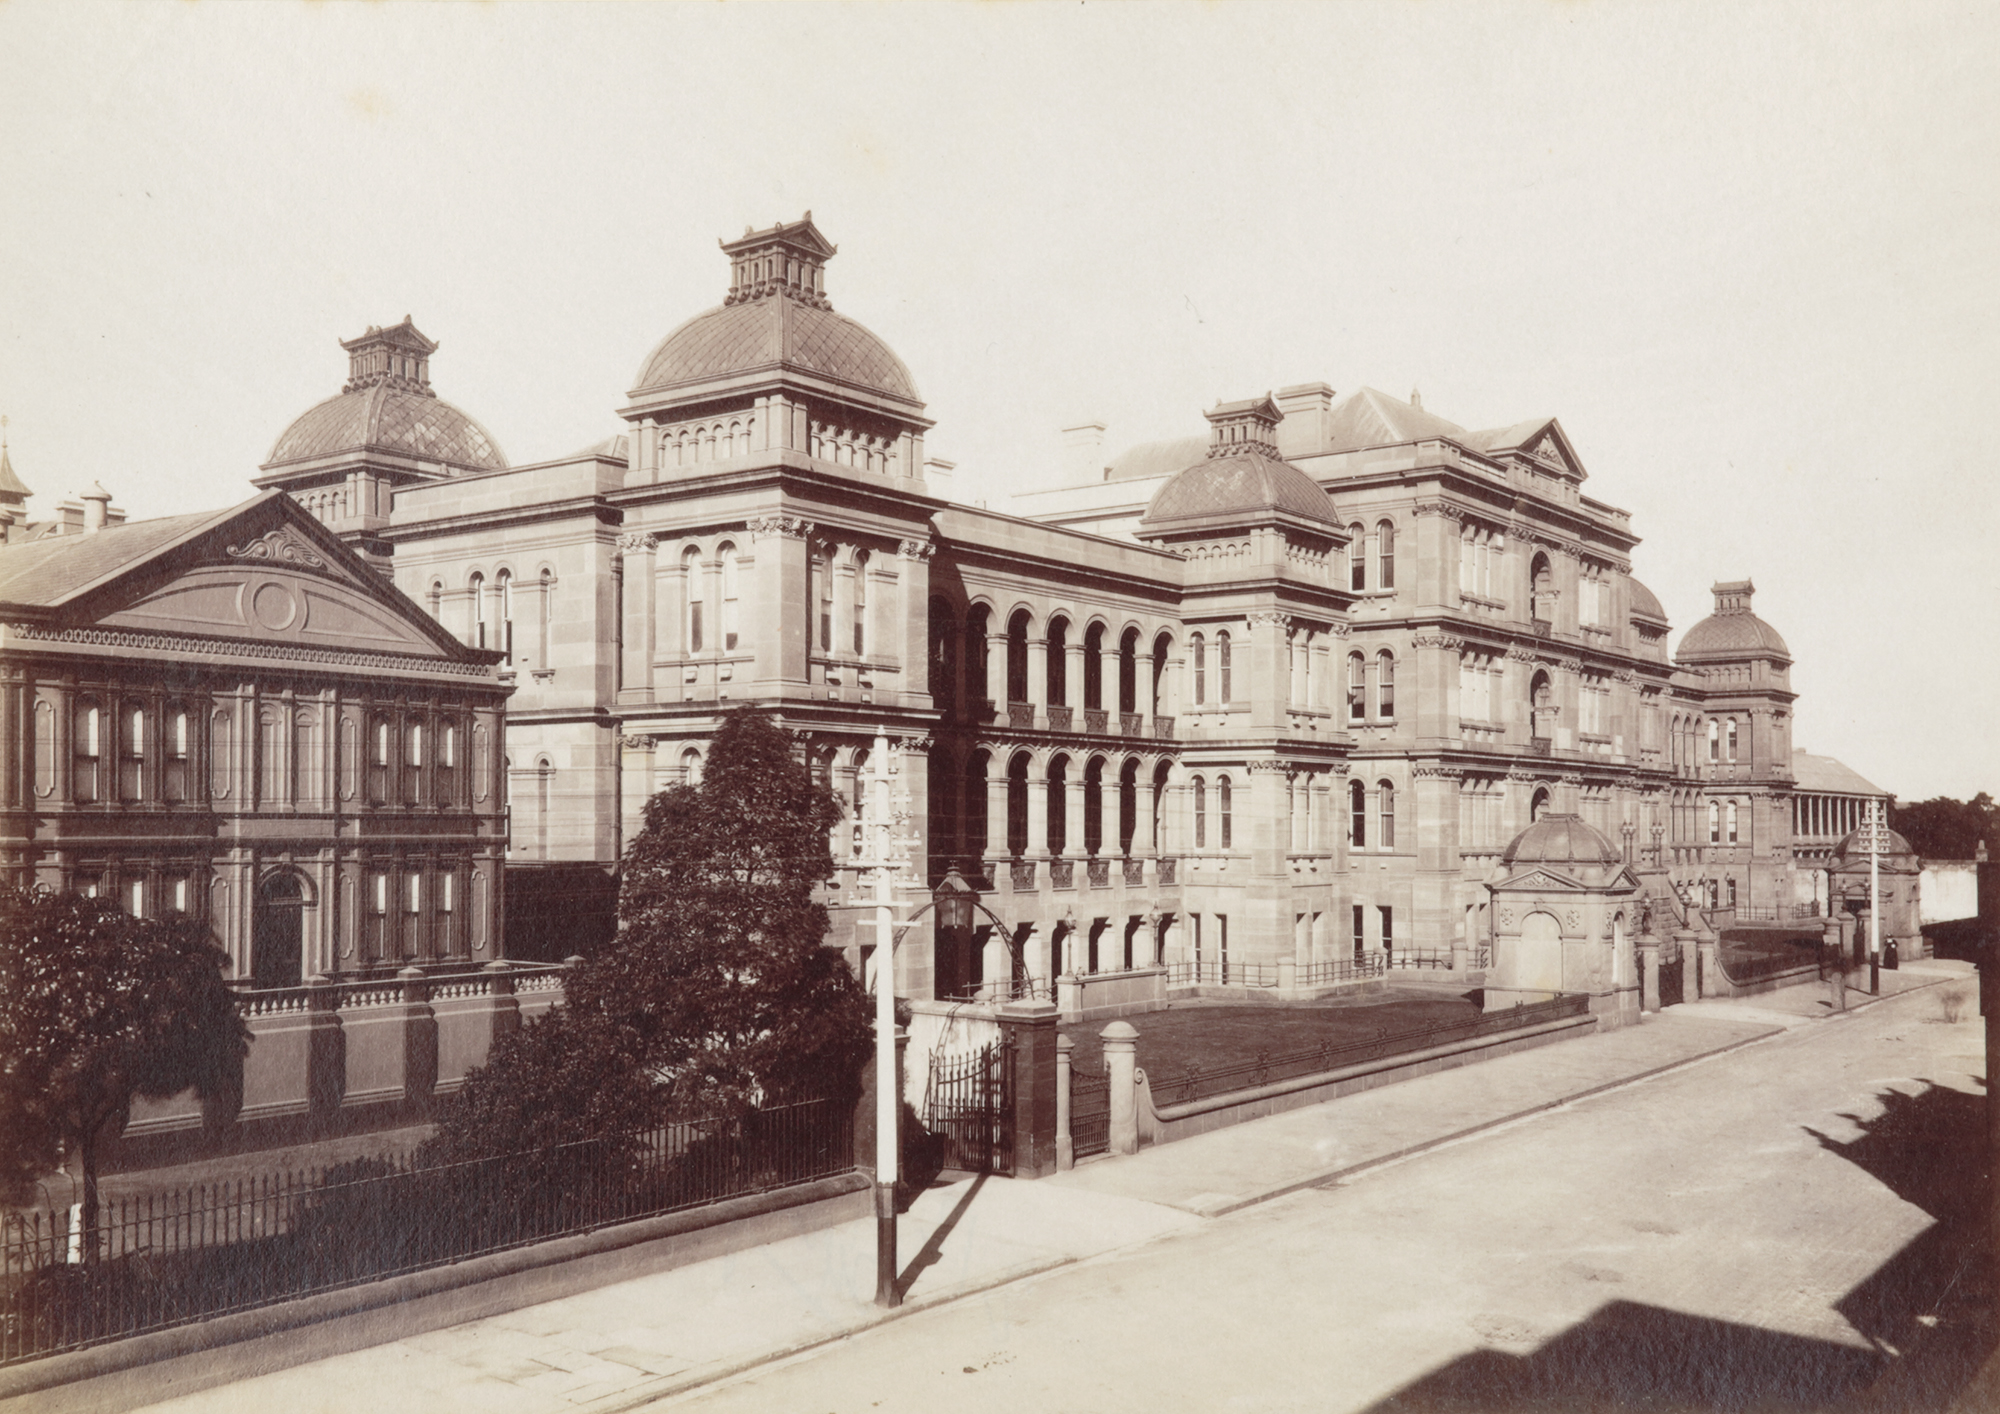 Sydney Hospital. - Antique Print from 1900